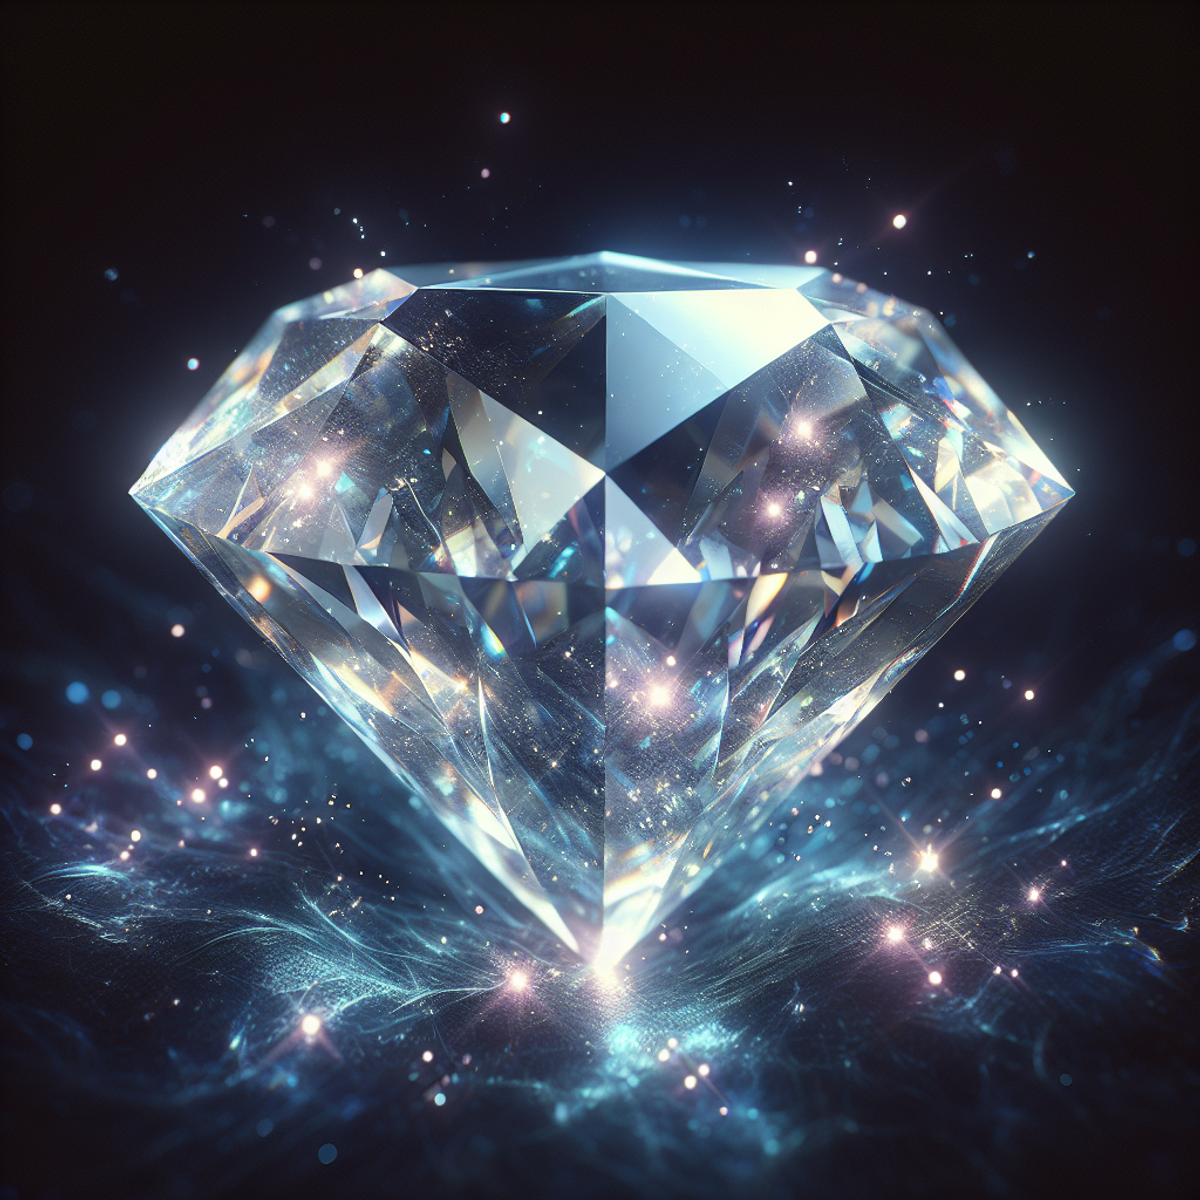 A Herkimer Diamond glowing mystically in the dark.